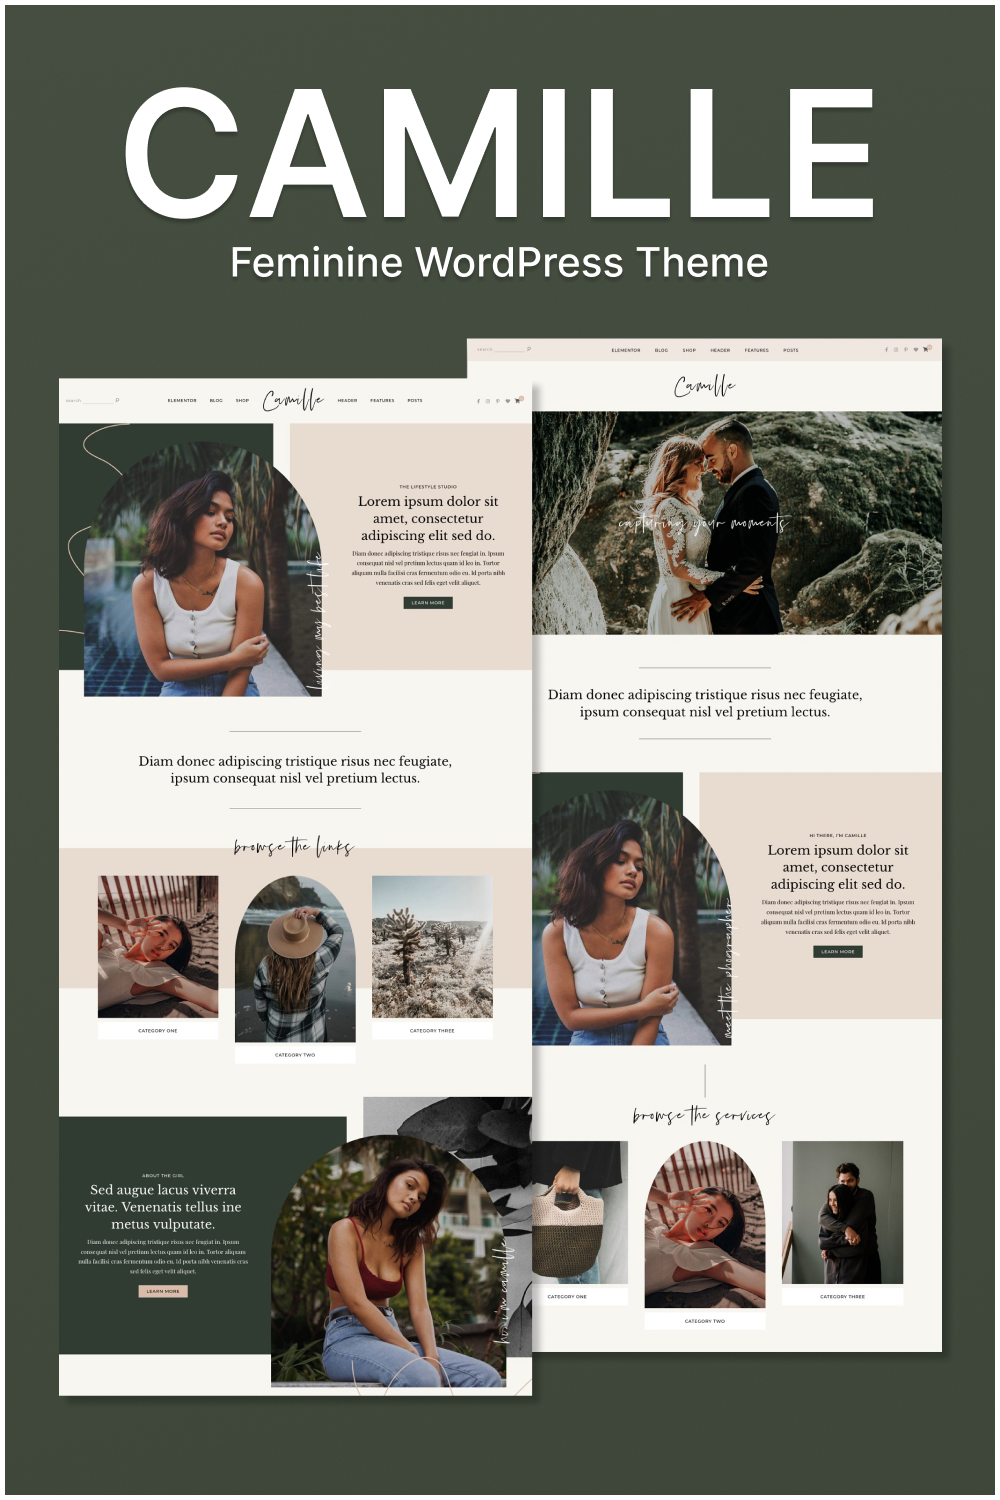 camille feminine wordpress theme 02 620